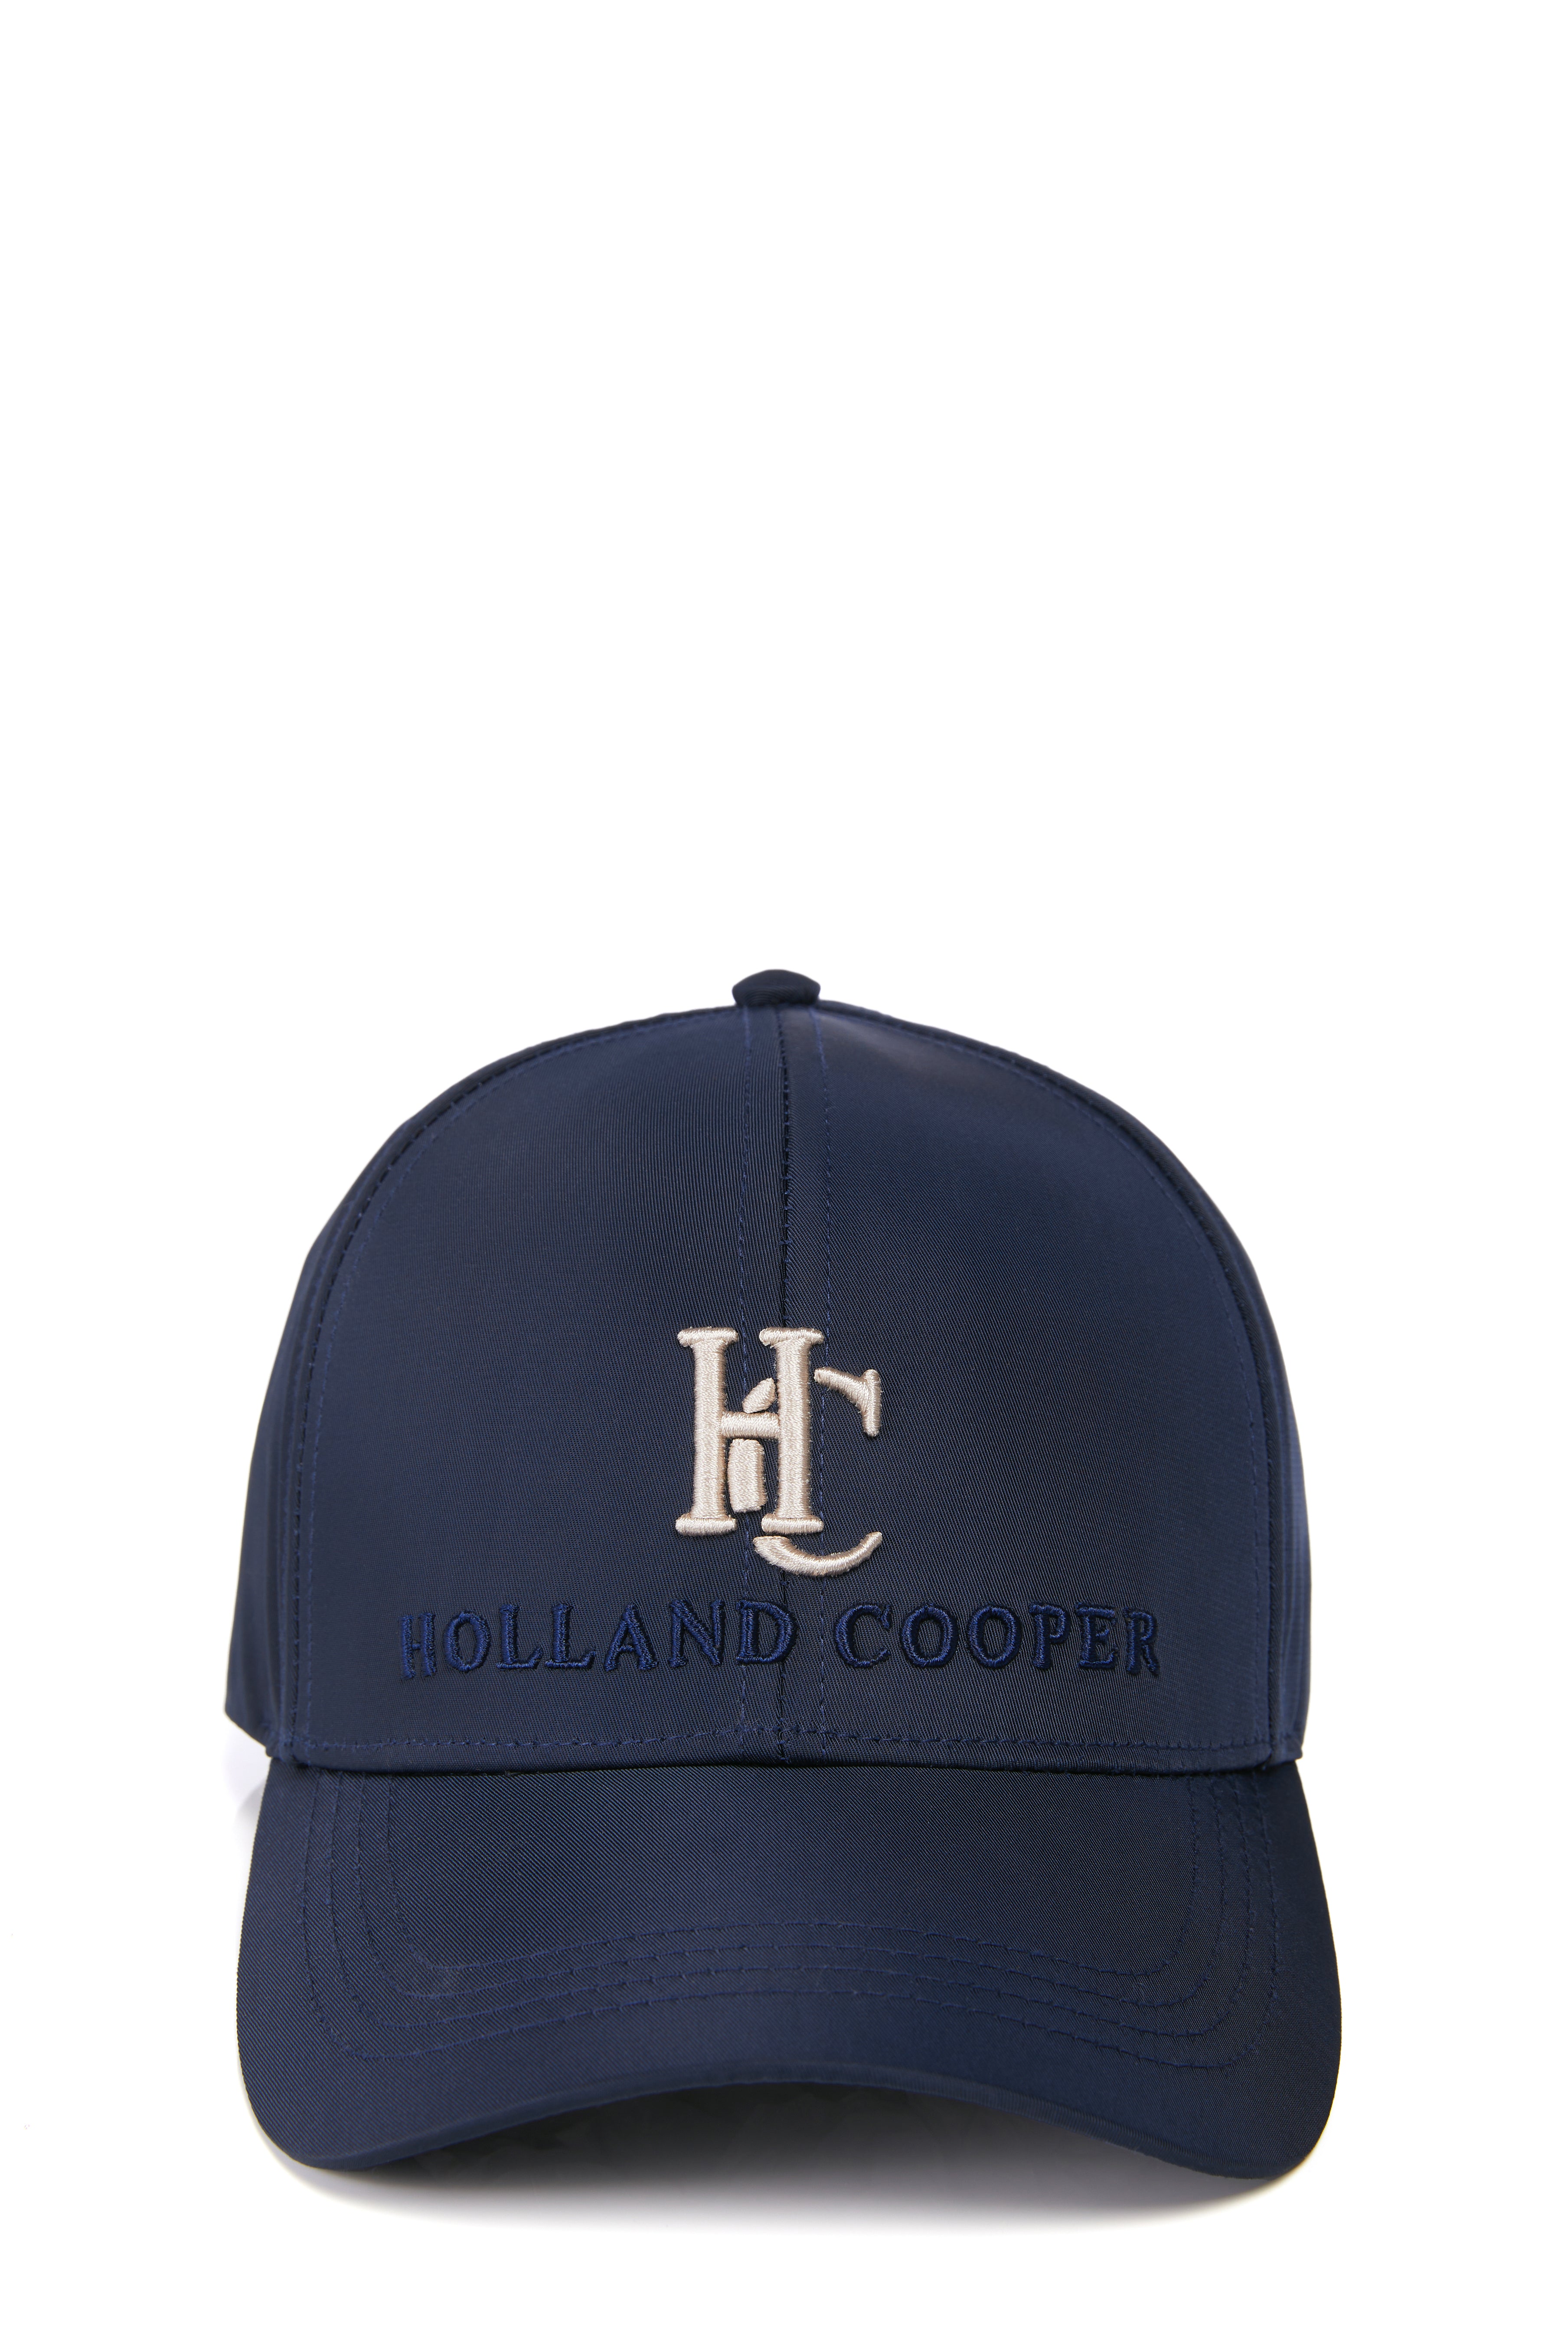 Holland Cooper Burghley Equestrian Cap